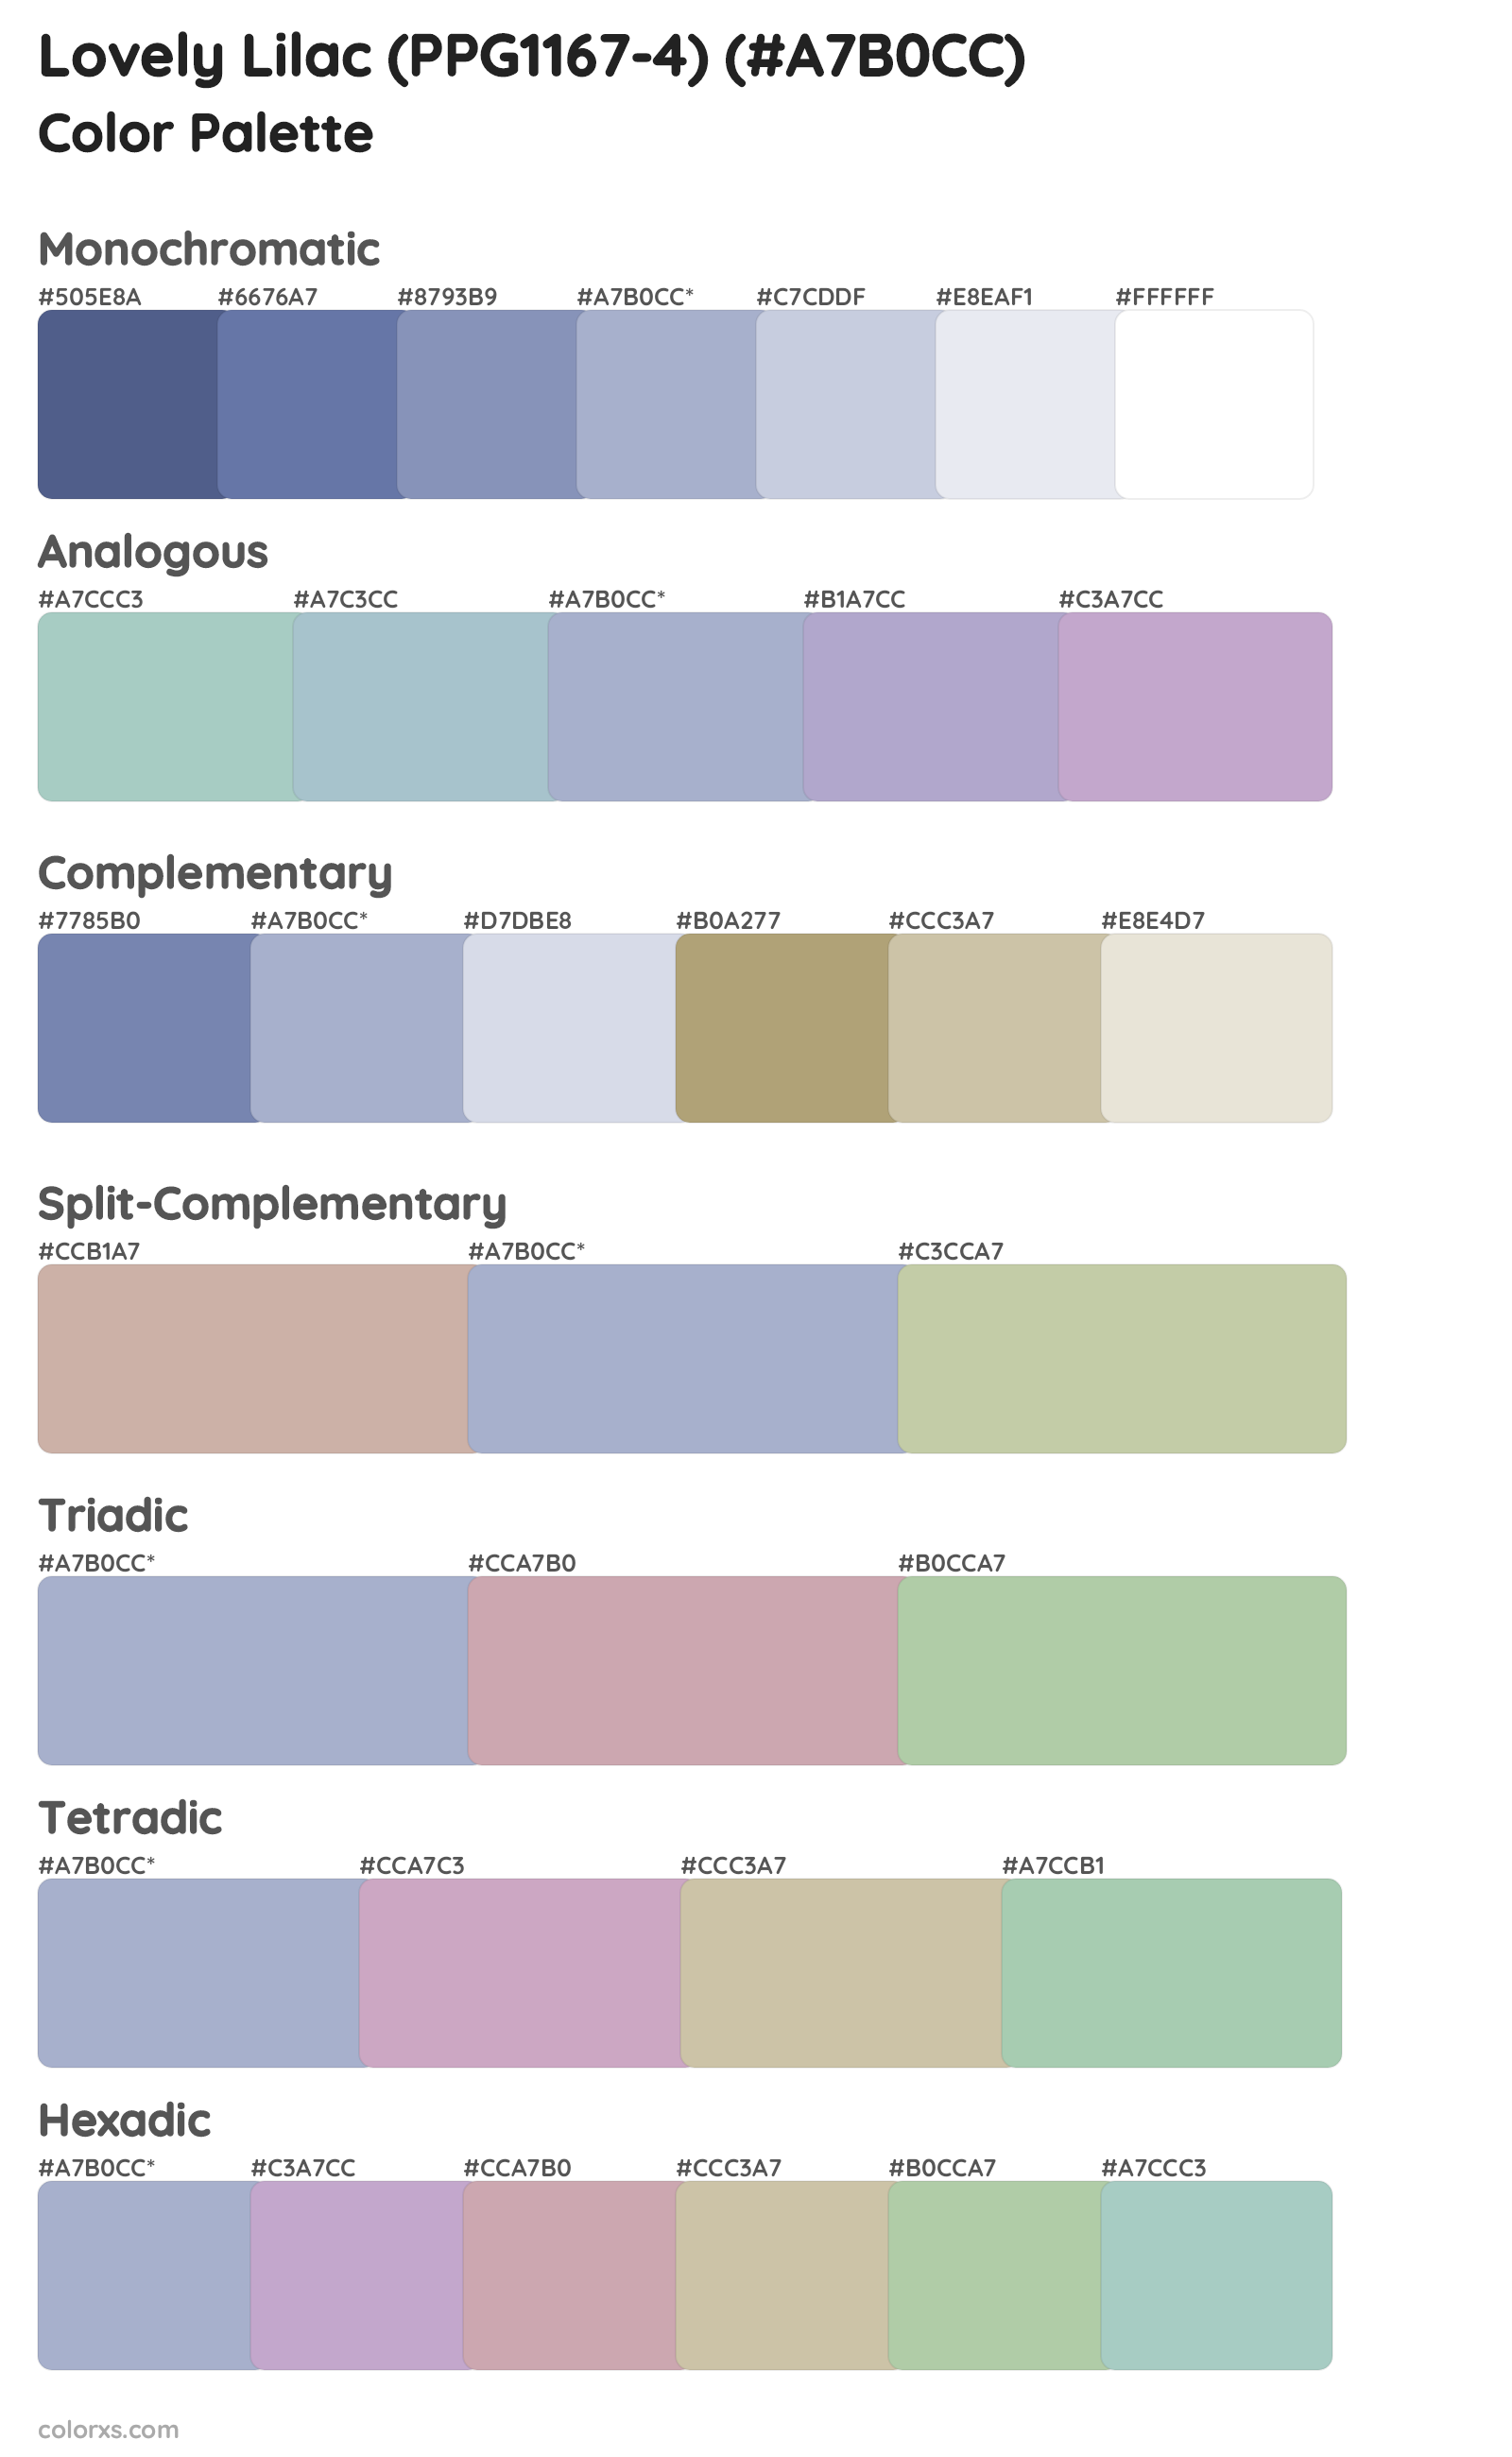 Lovely Lilac (PPG1167-4) Color Scheme Palettes